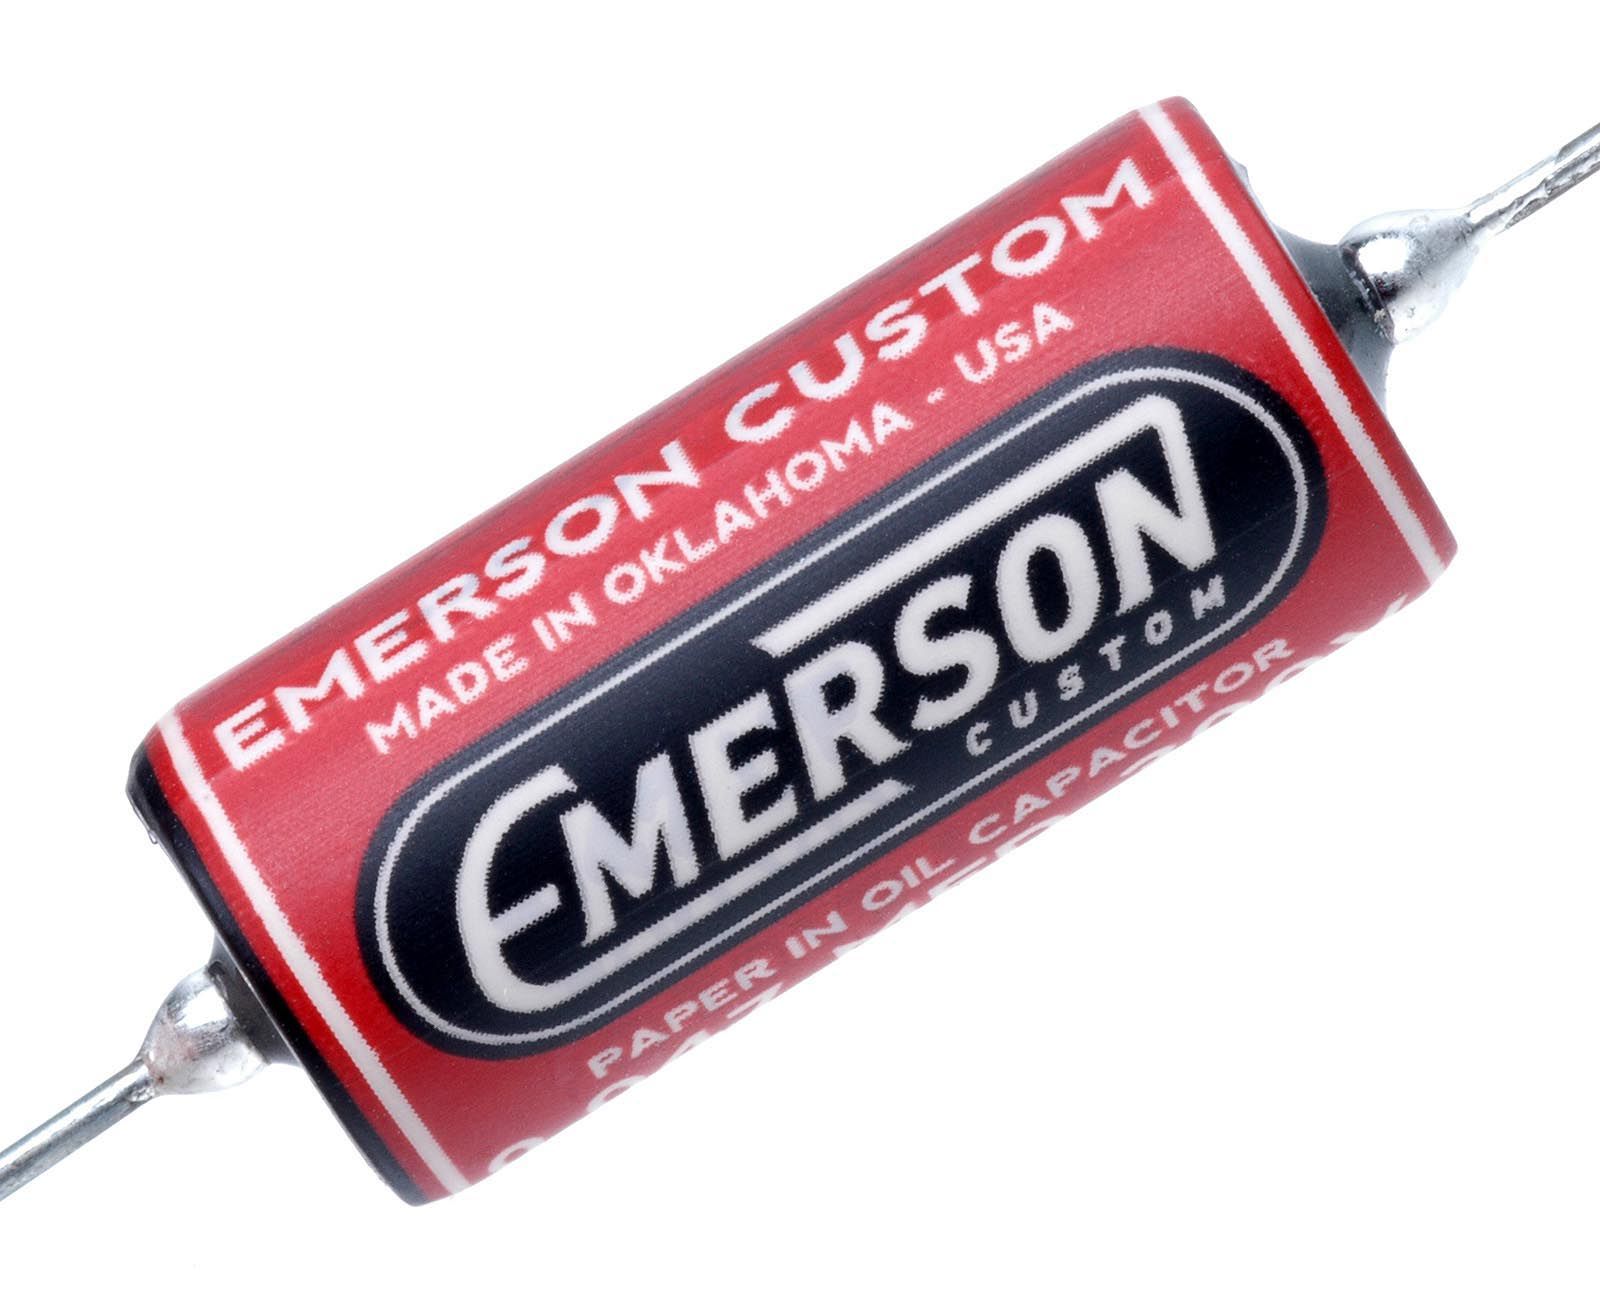 Capacitor A Oleo Emerson Custom Pio .047 Red - EMERSON